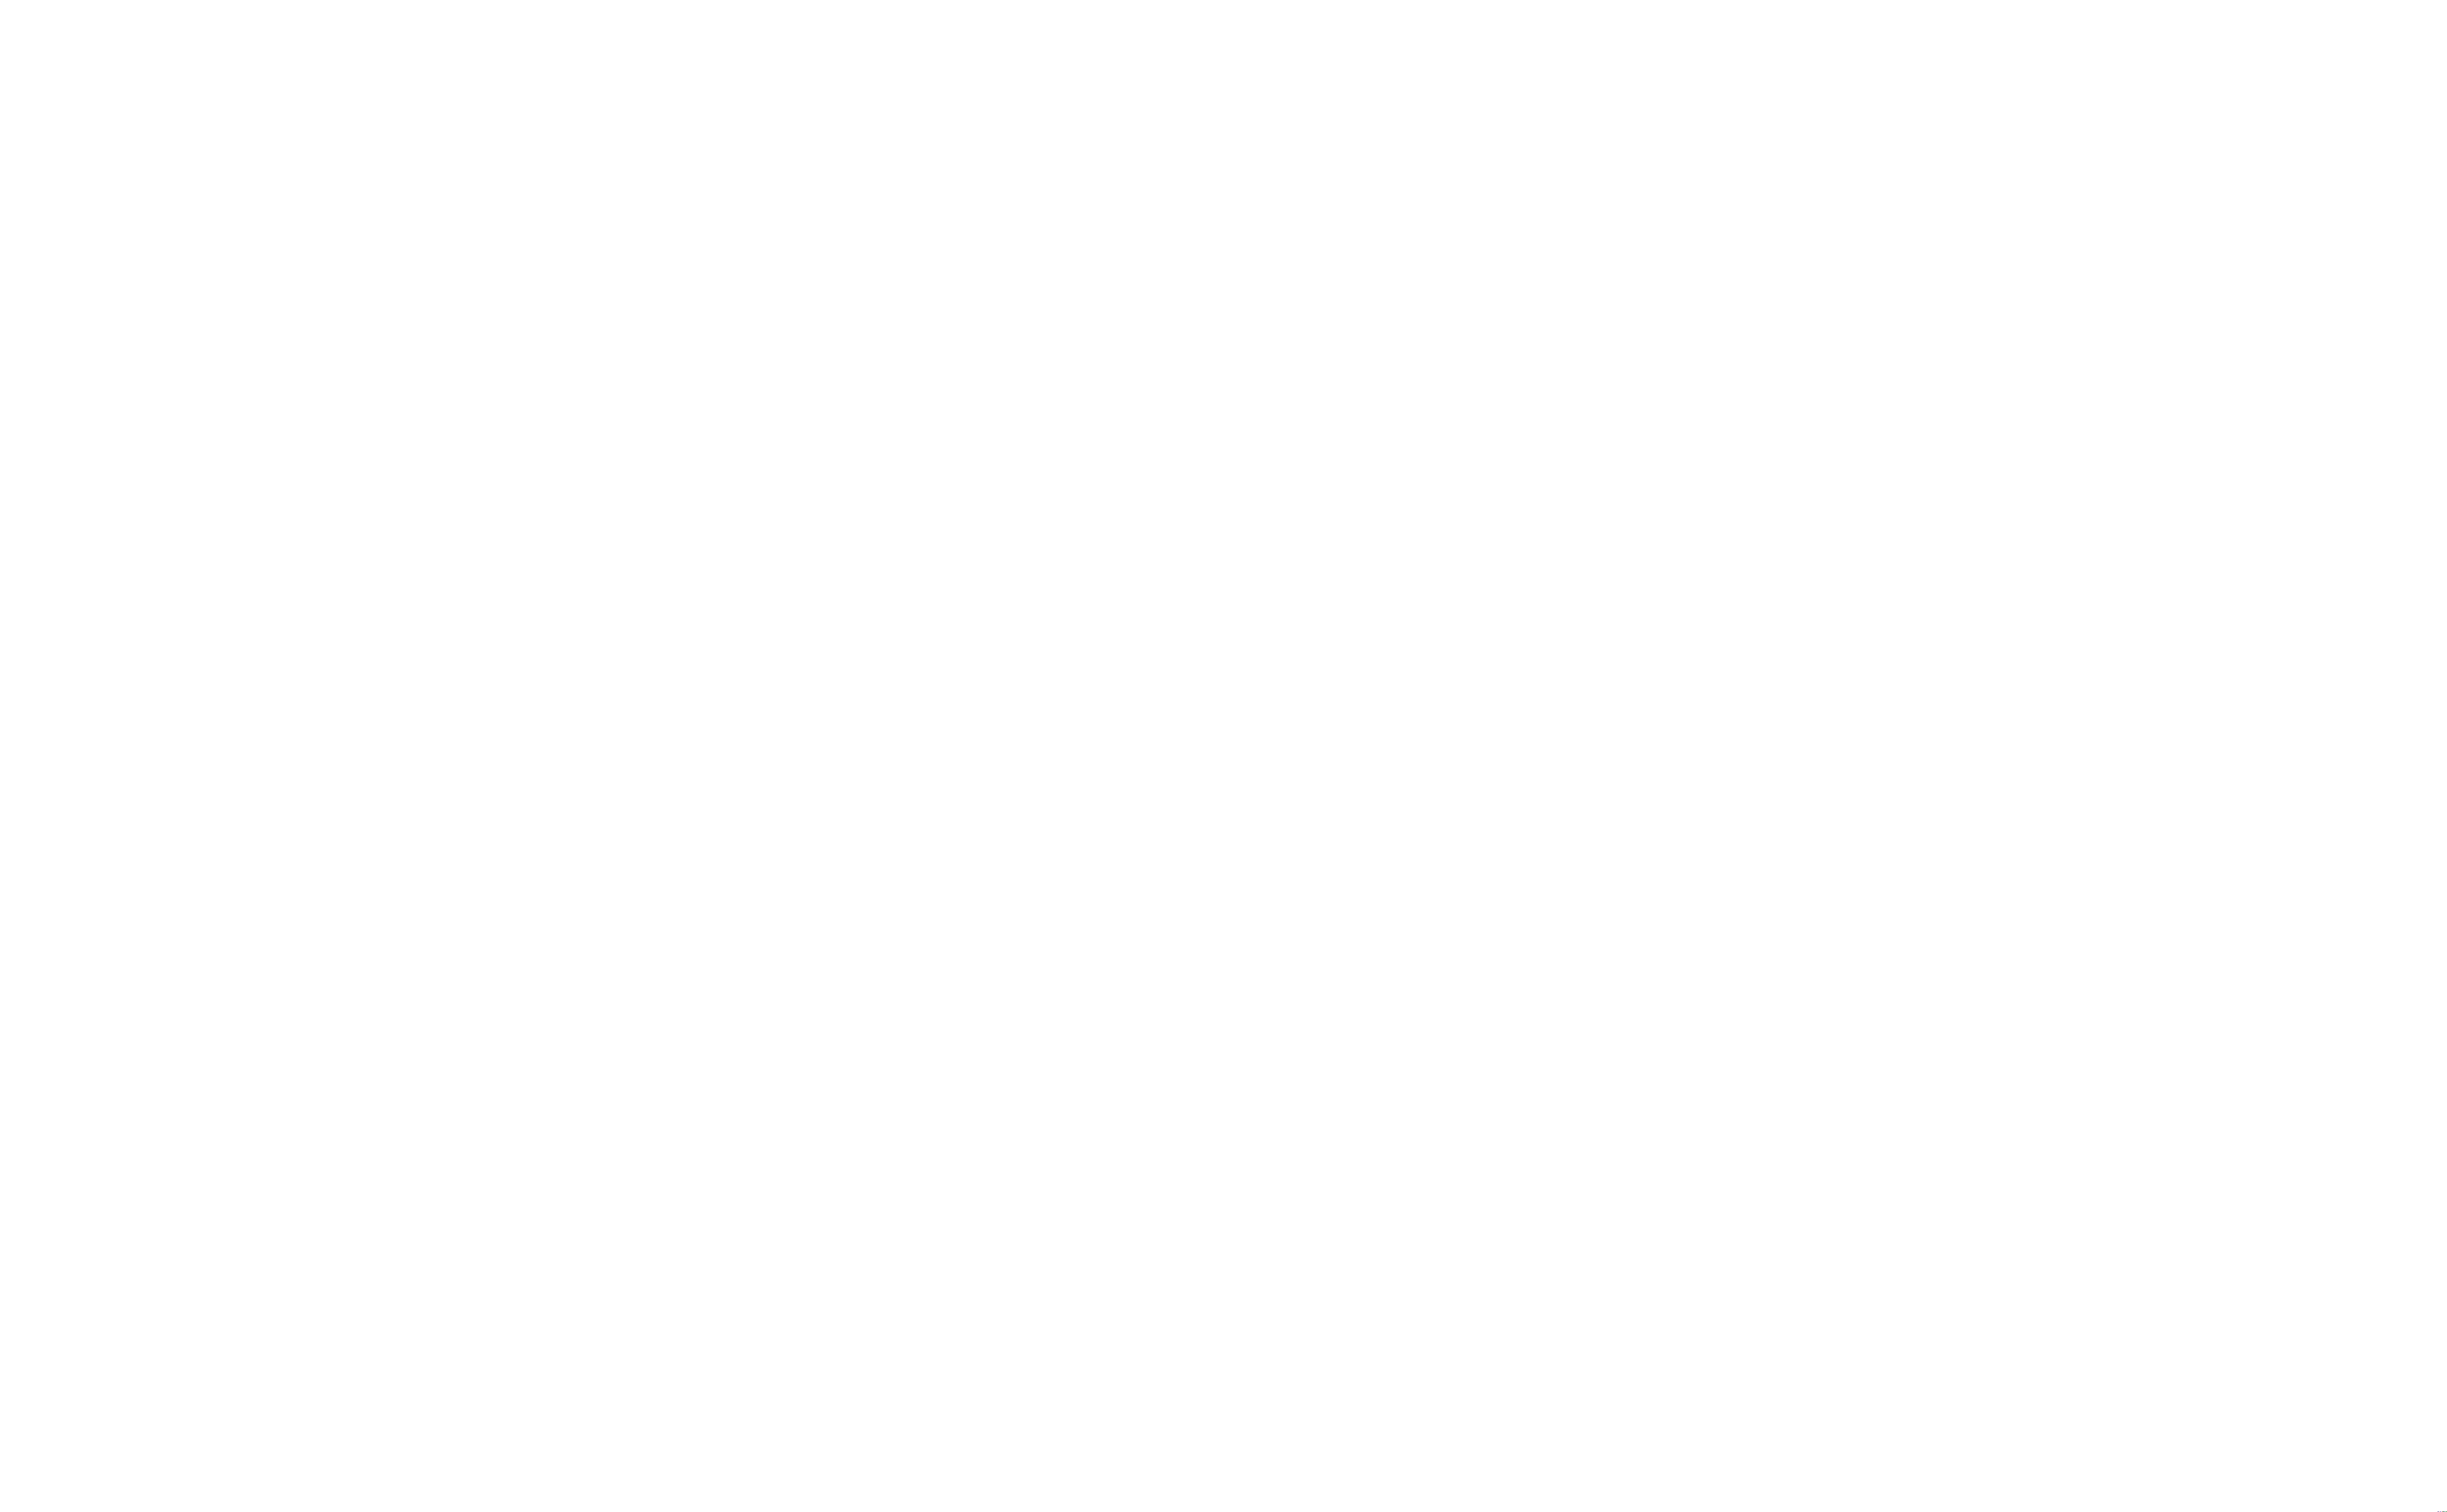 Modernist tacked logo type in Helvetica, spelling Lewis Mackenzie